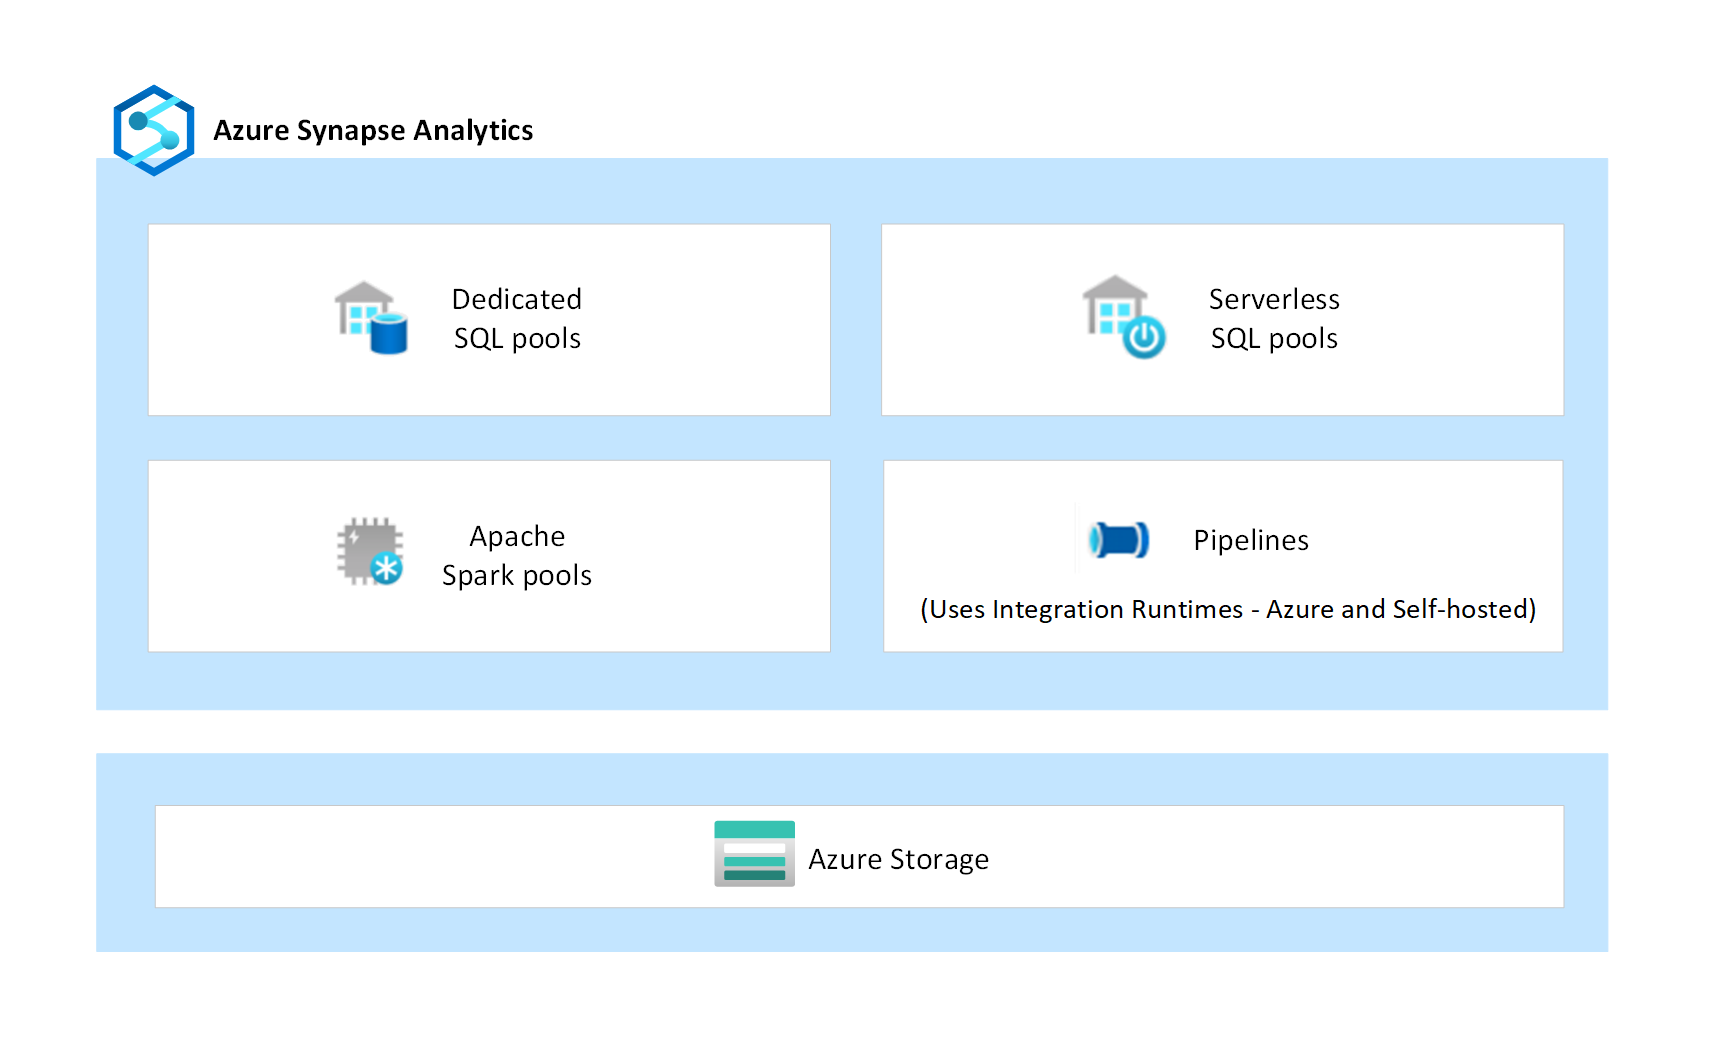 Azure Synapse 元件圖表，顯示監視專用 SQL 集區、無伺服器 SQL 集區、Apache Spark 集區和管線。